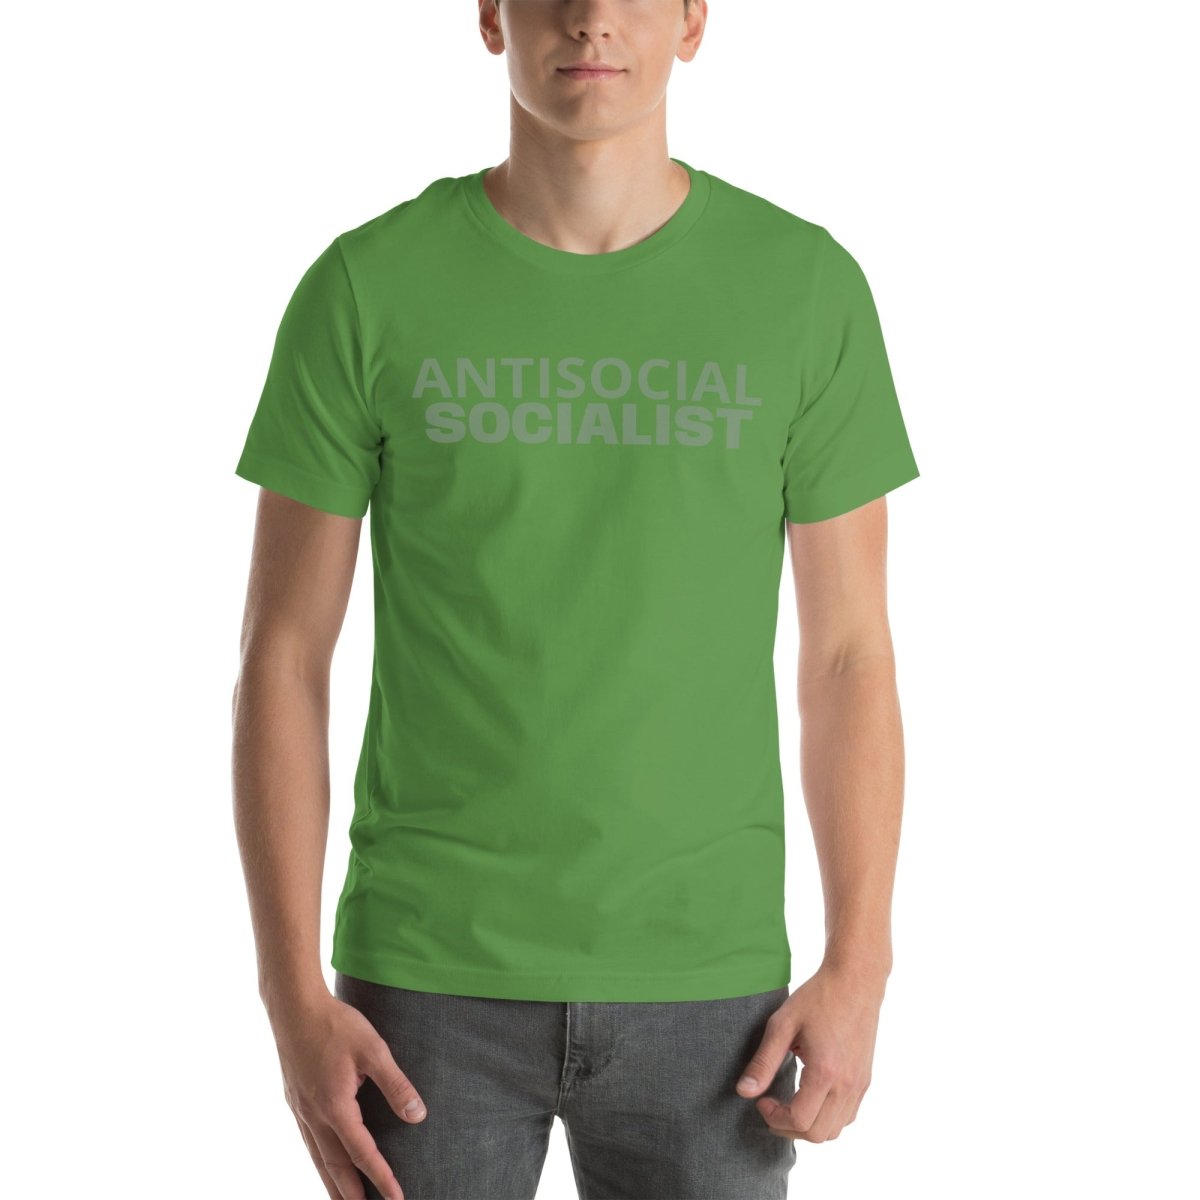 Antisocial Socialist Design Unisex t-shirt - The Dude Abides - T-shirt - activism - advocacy - Antifa supporter